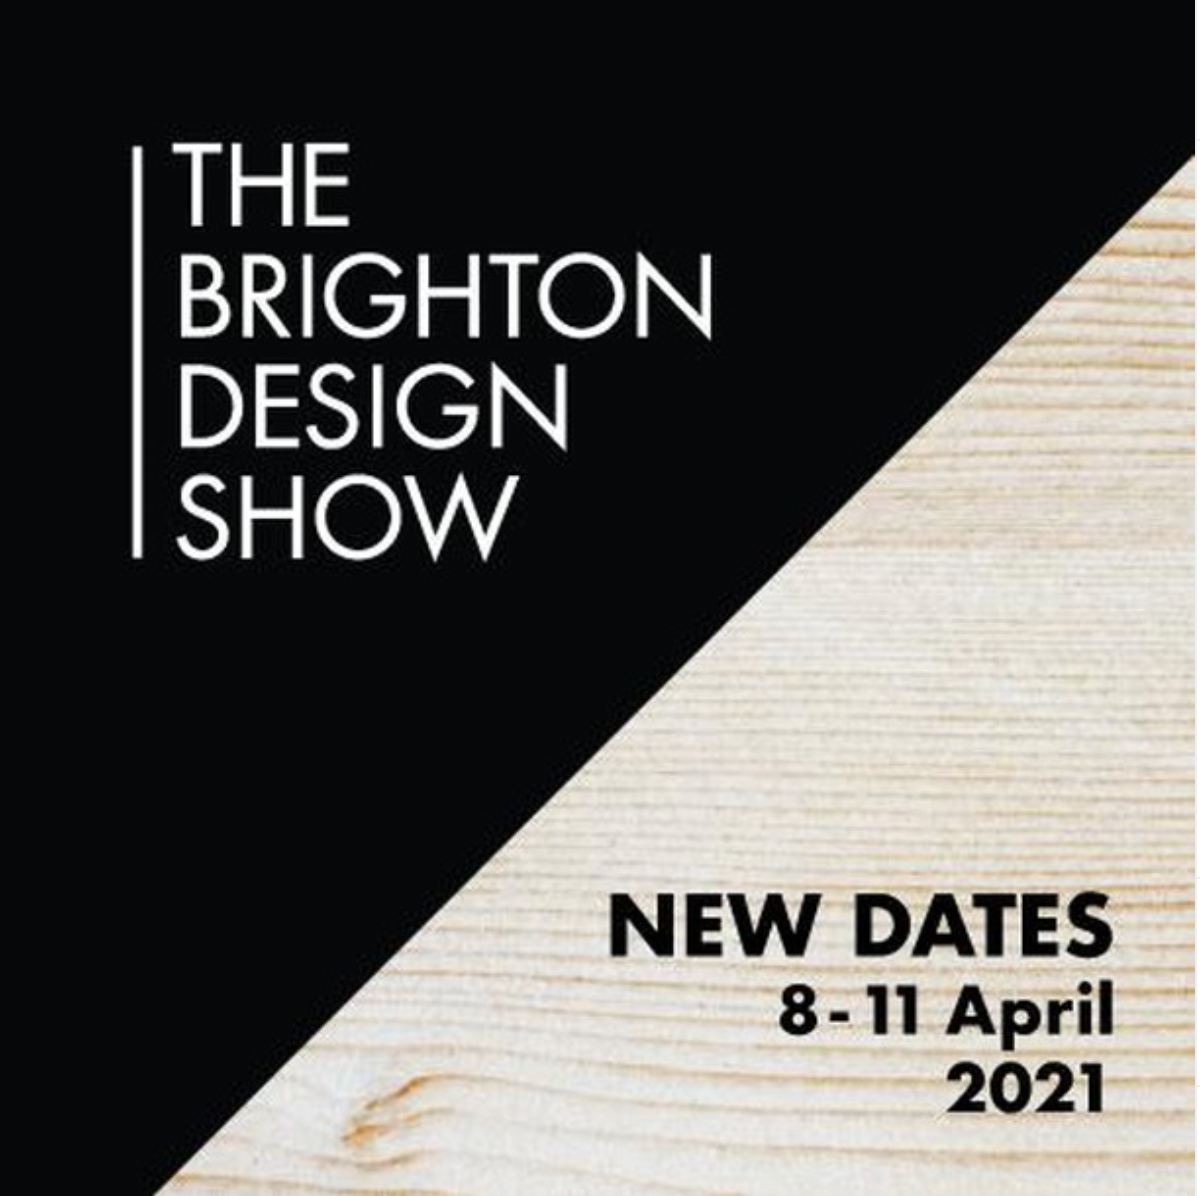 The Brighton Design Show